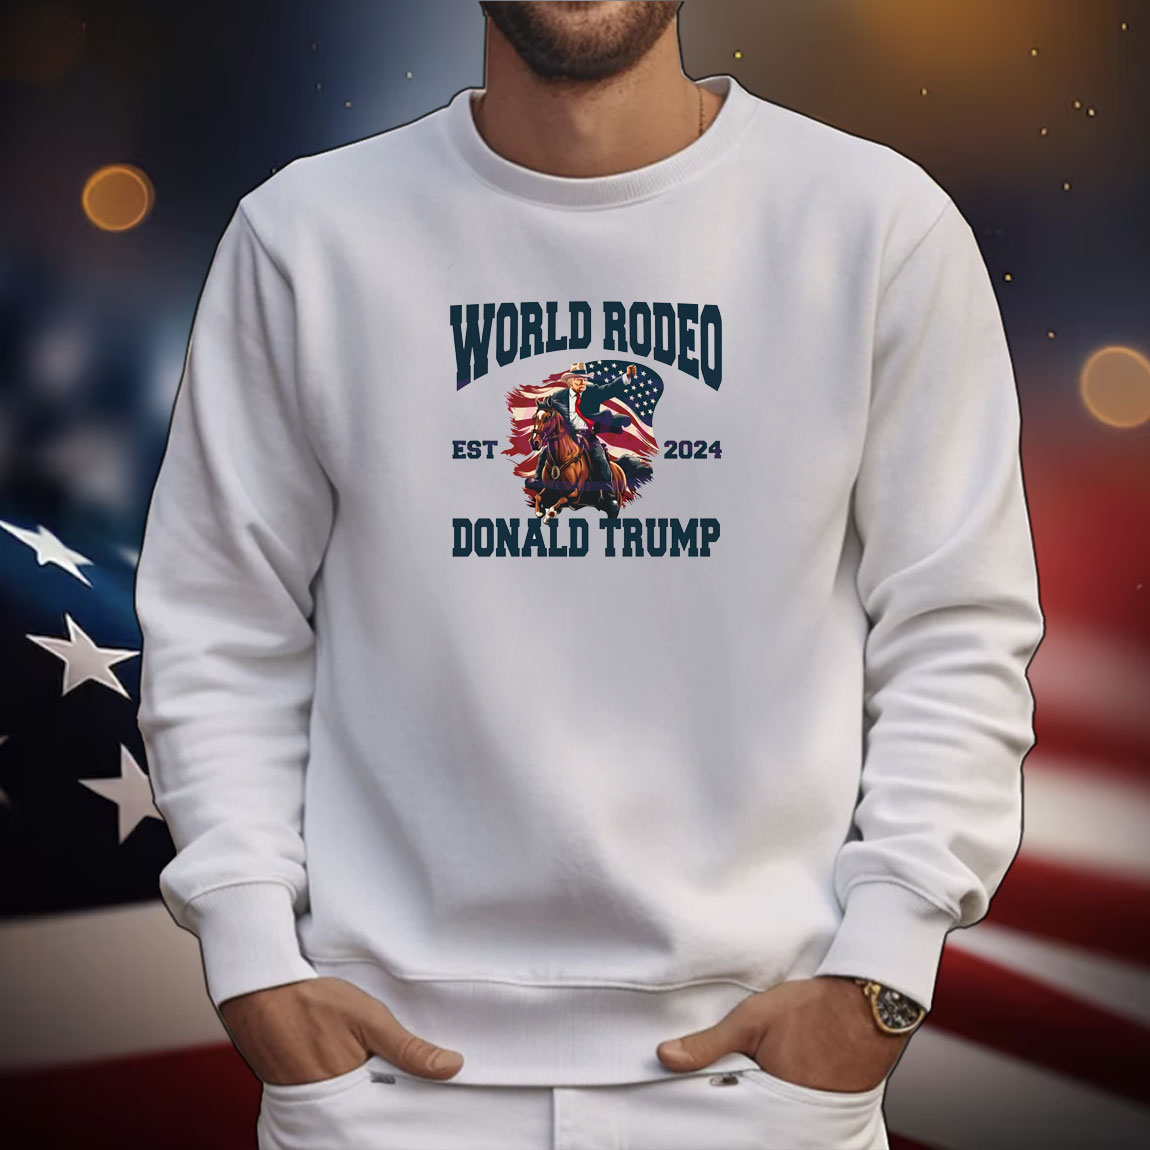 World Rodeo Est 2024 Donald Trump Tee Shirts